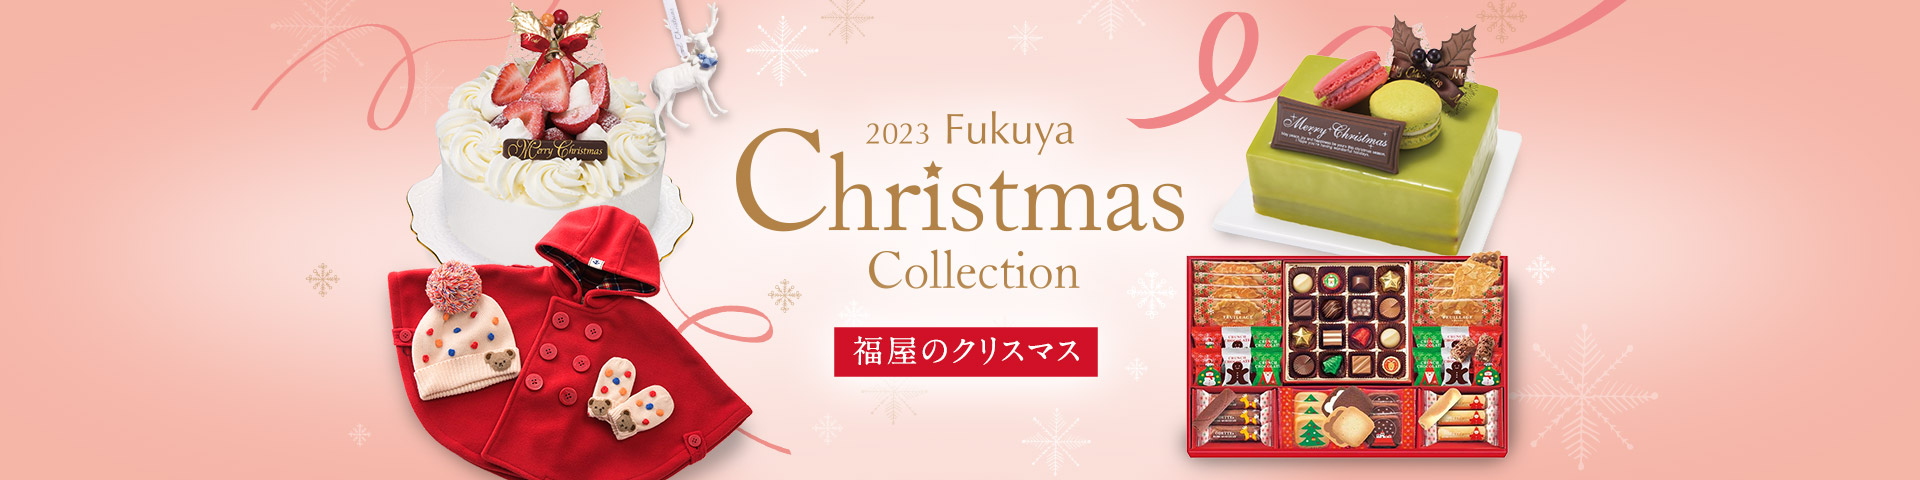 Fukuya Christmas Collection 福屋のクリスマス2023